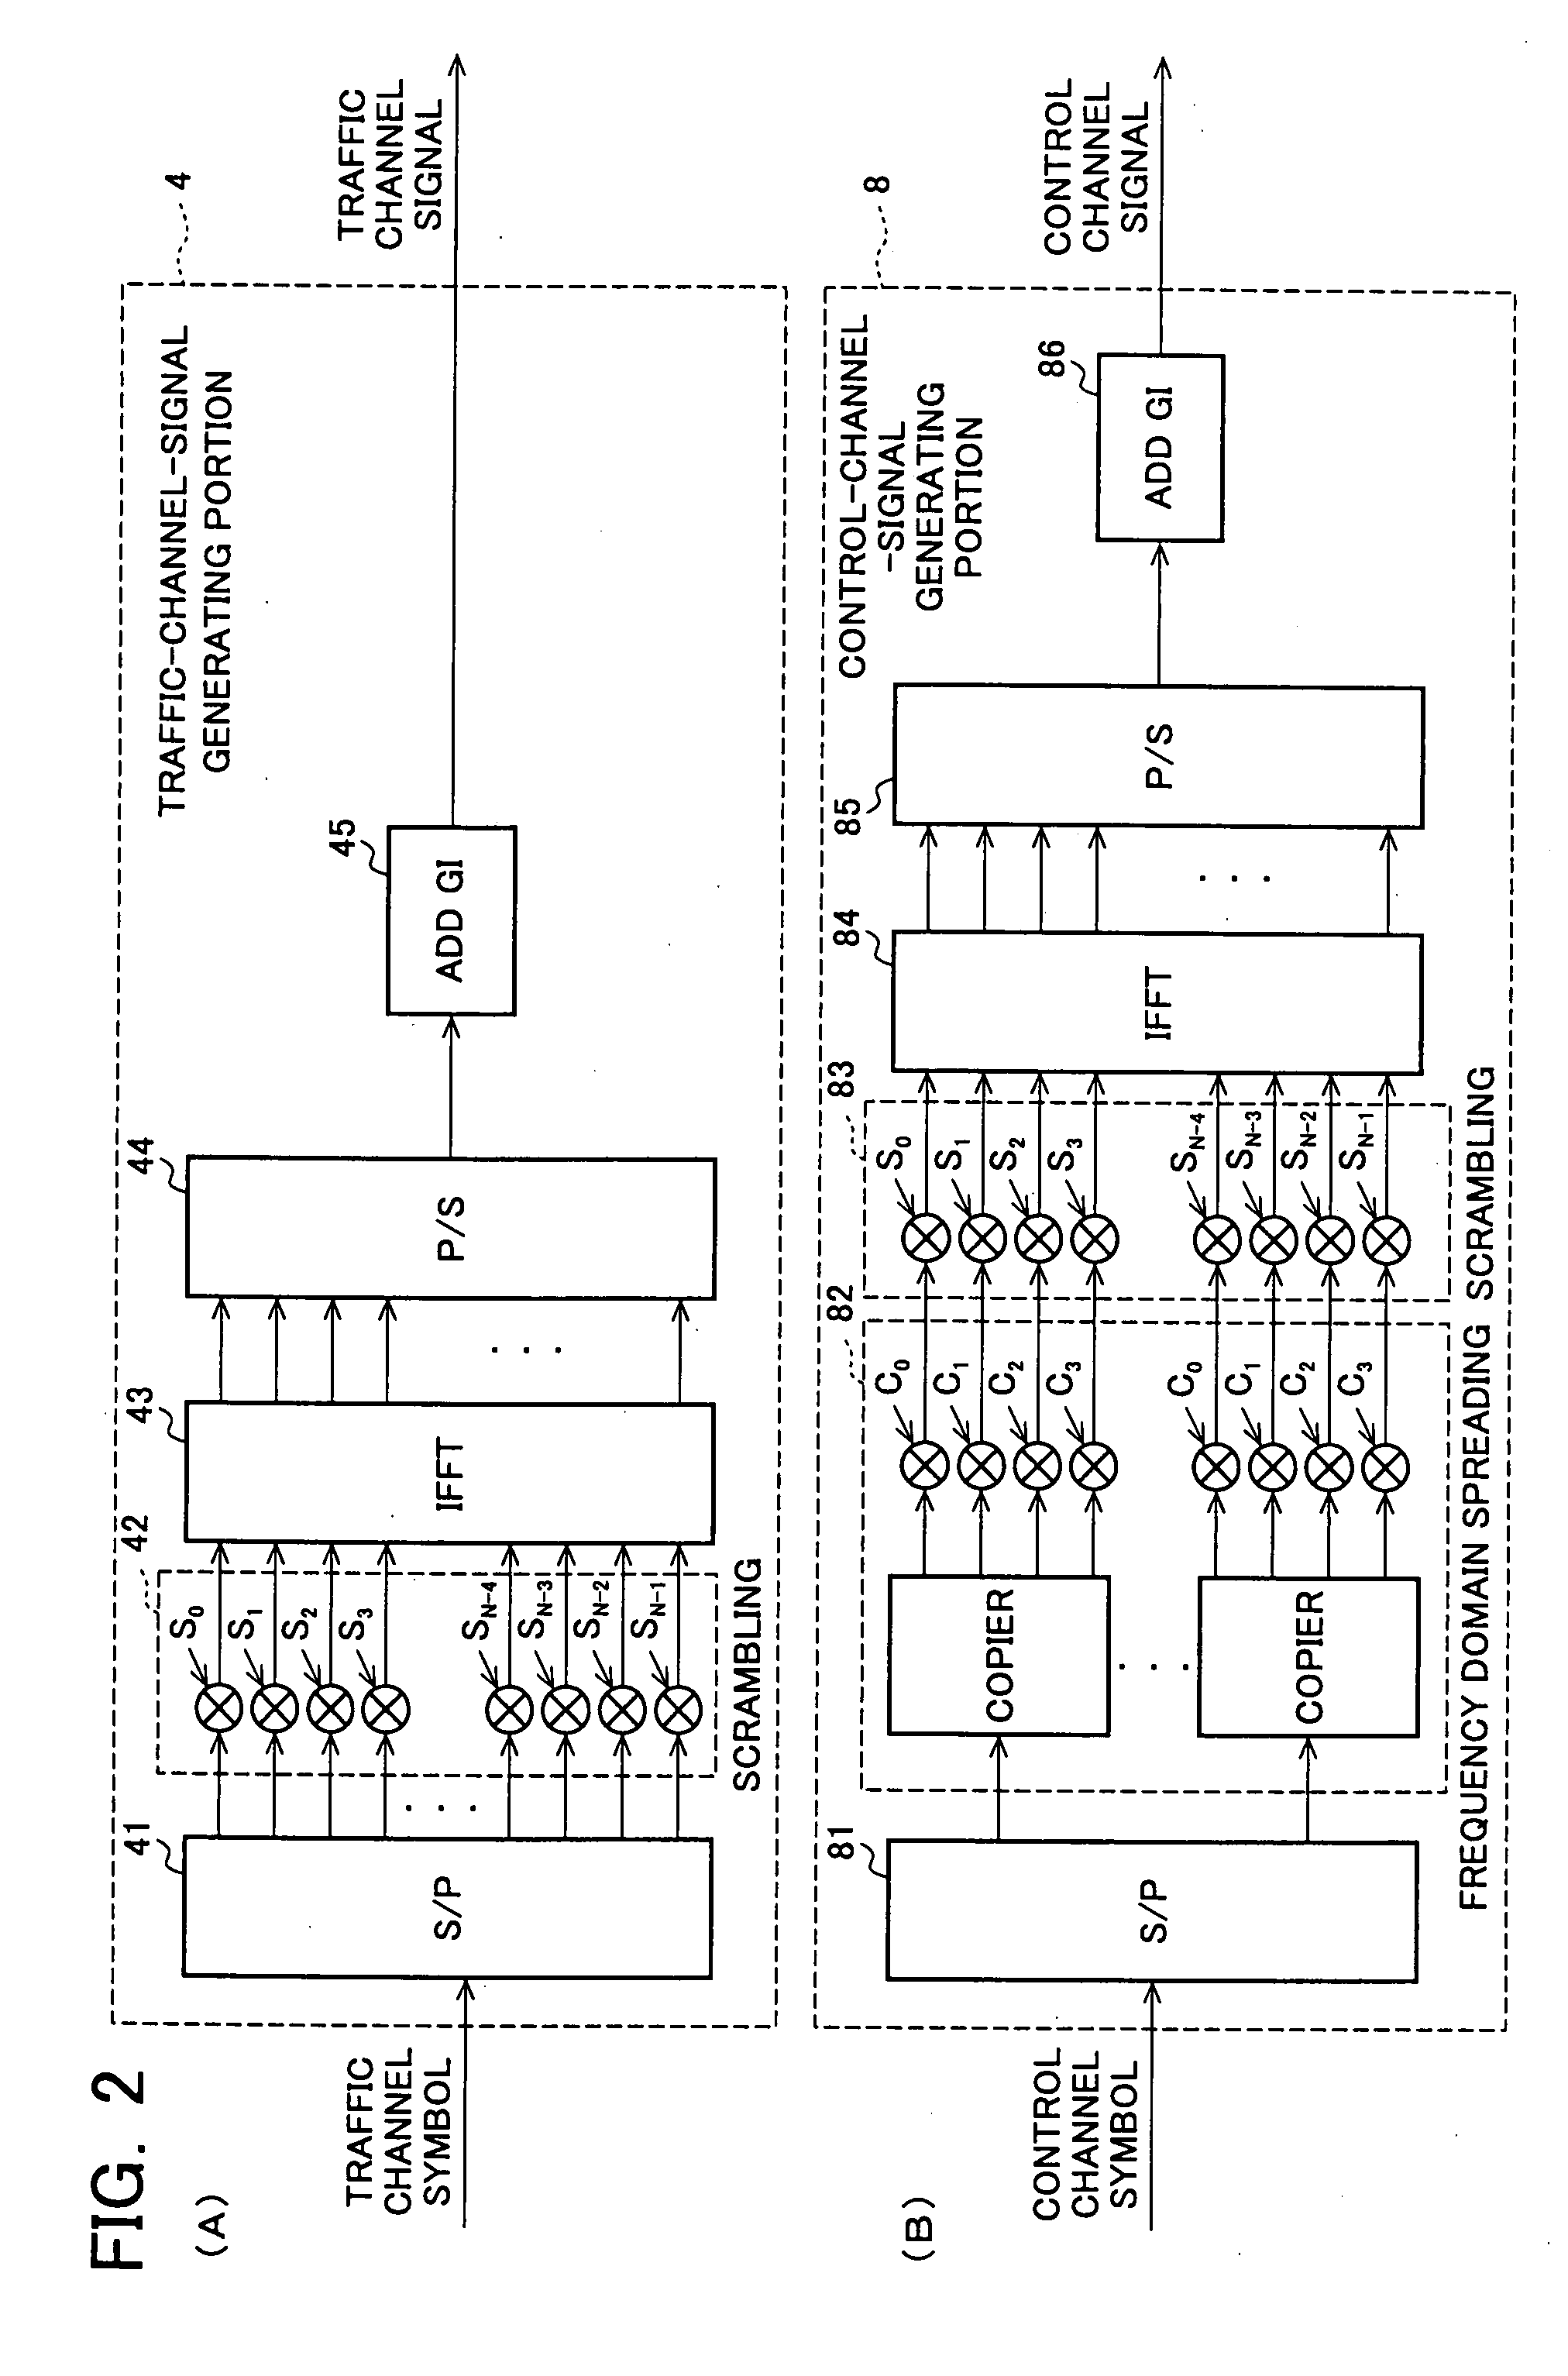 Receiver Apparatus and Transmitter Apparatus